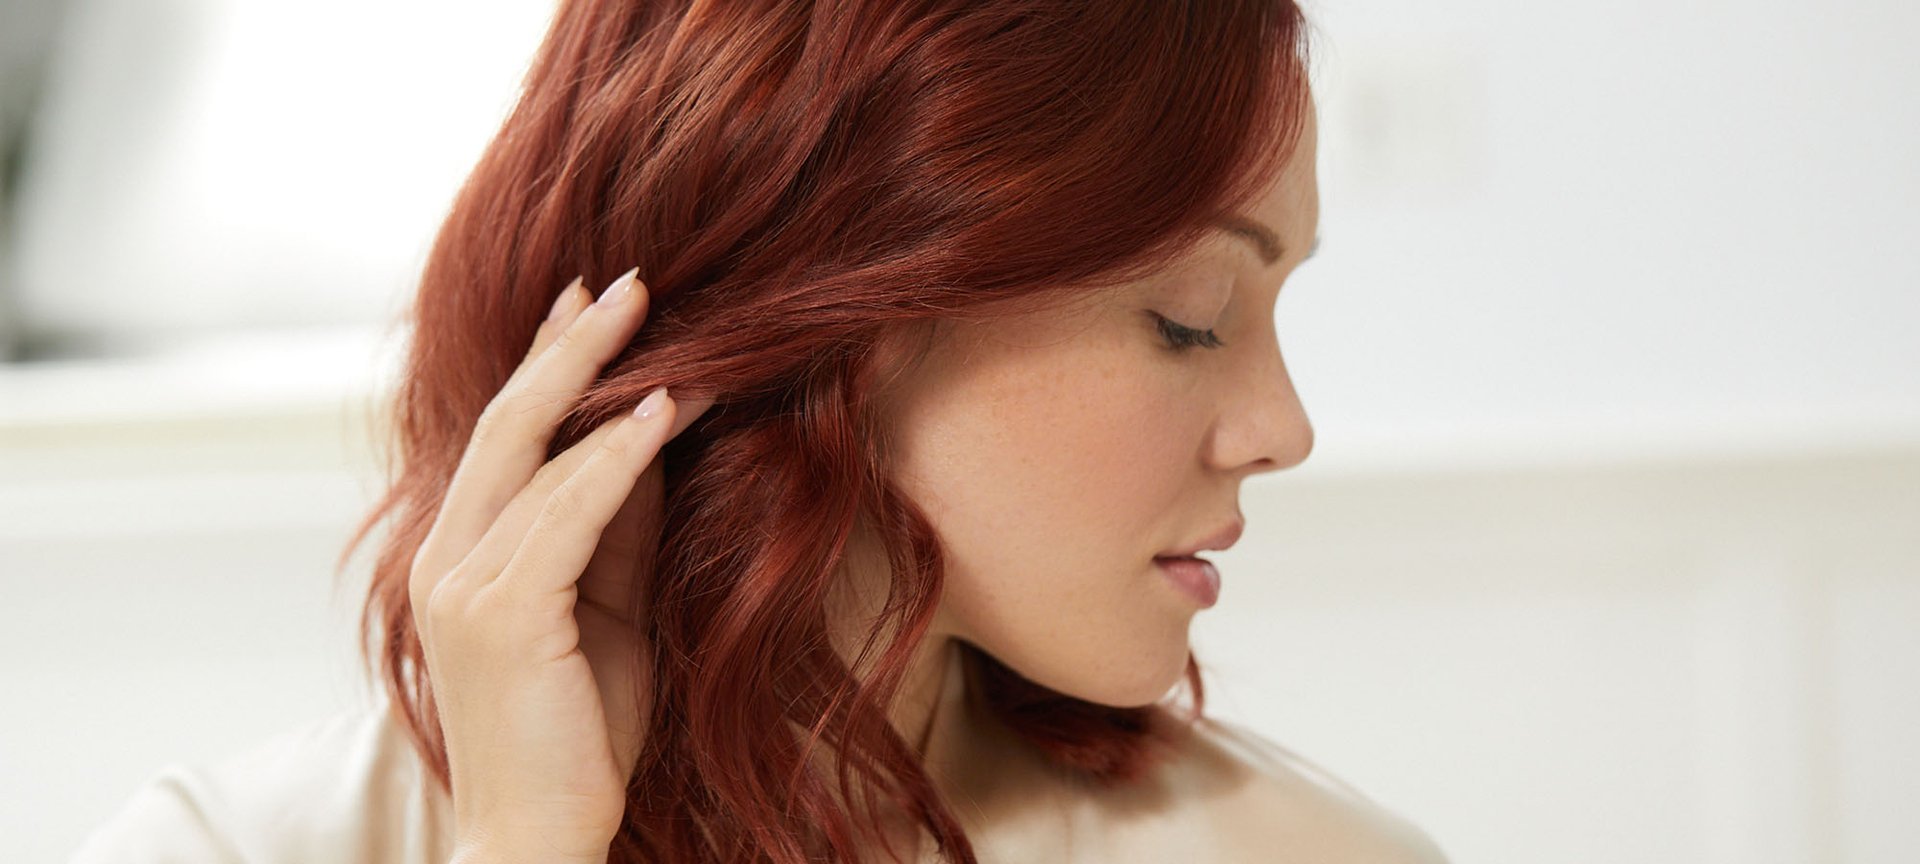 3 L'oreal Pro DIA Richesse Demi-Permanent Tone-on-Tone Creme Hair